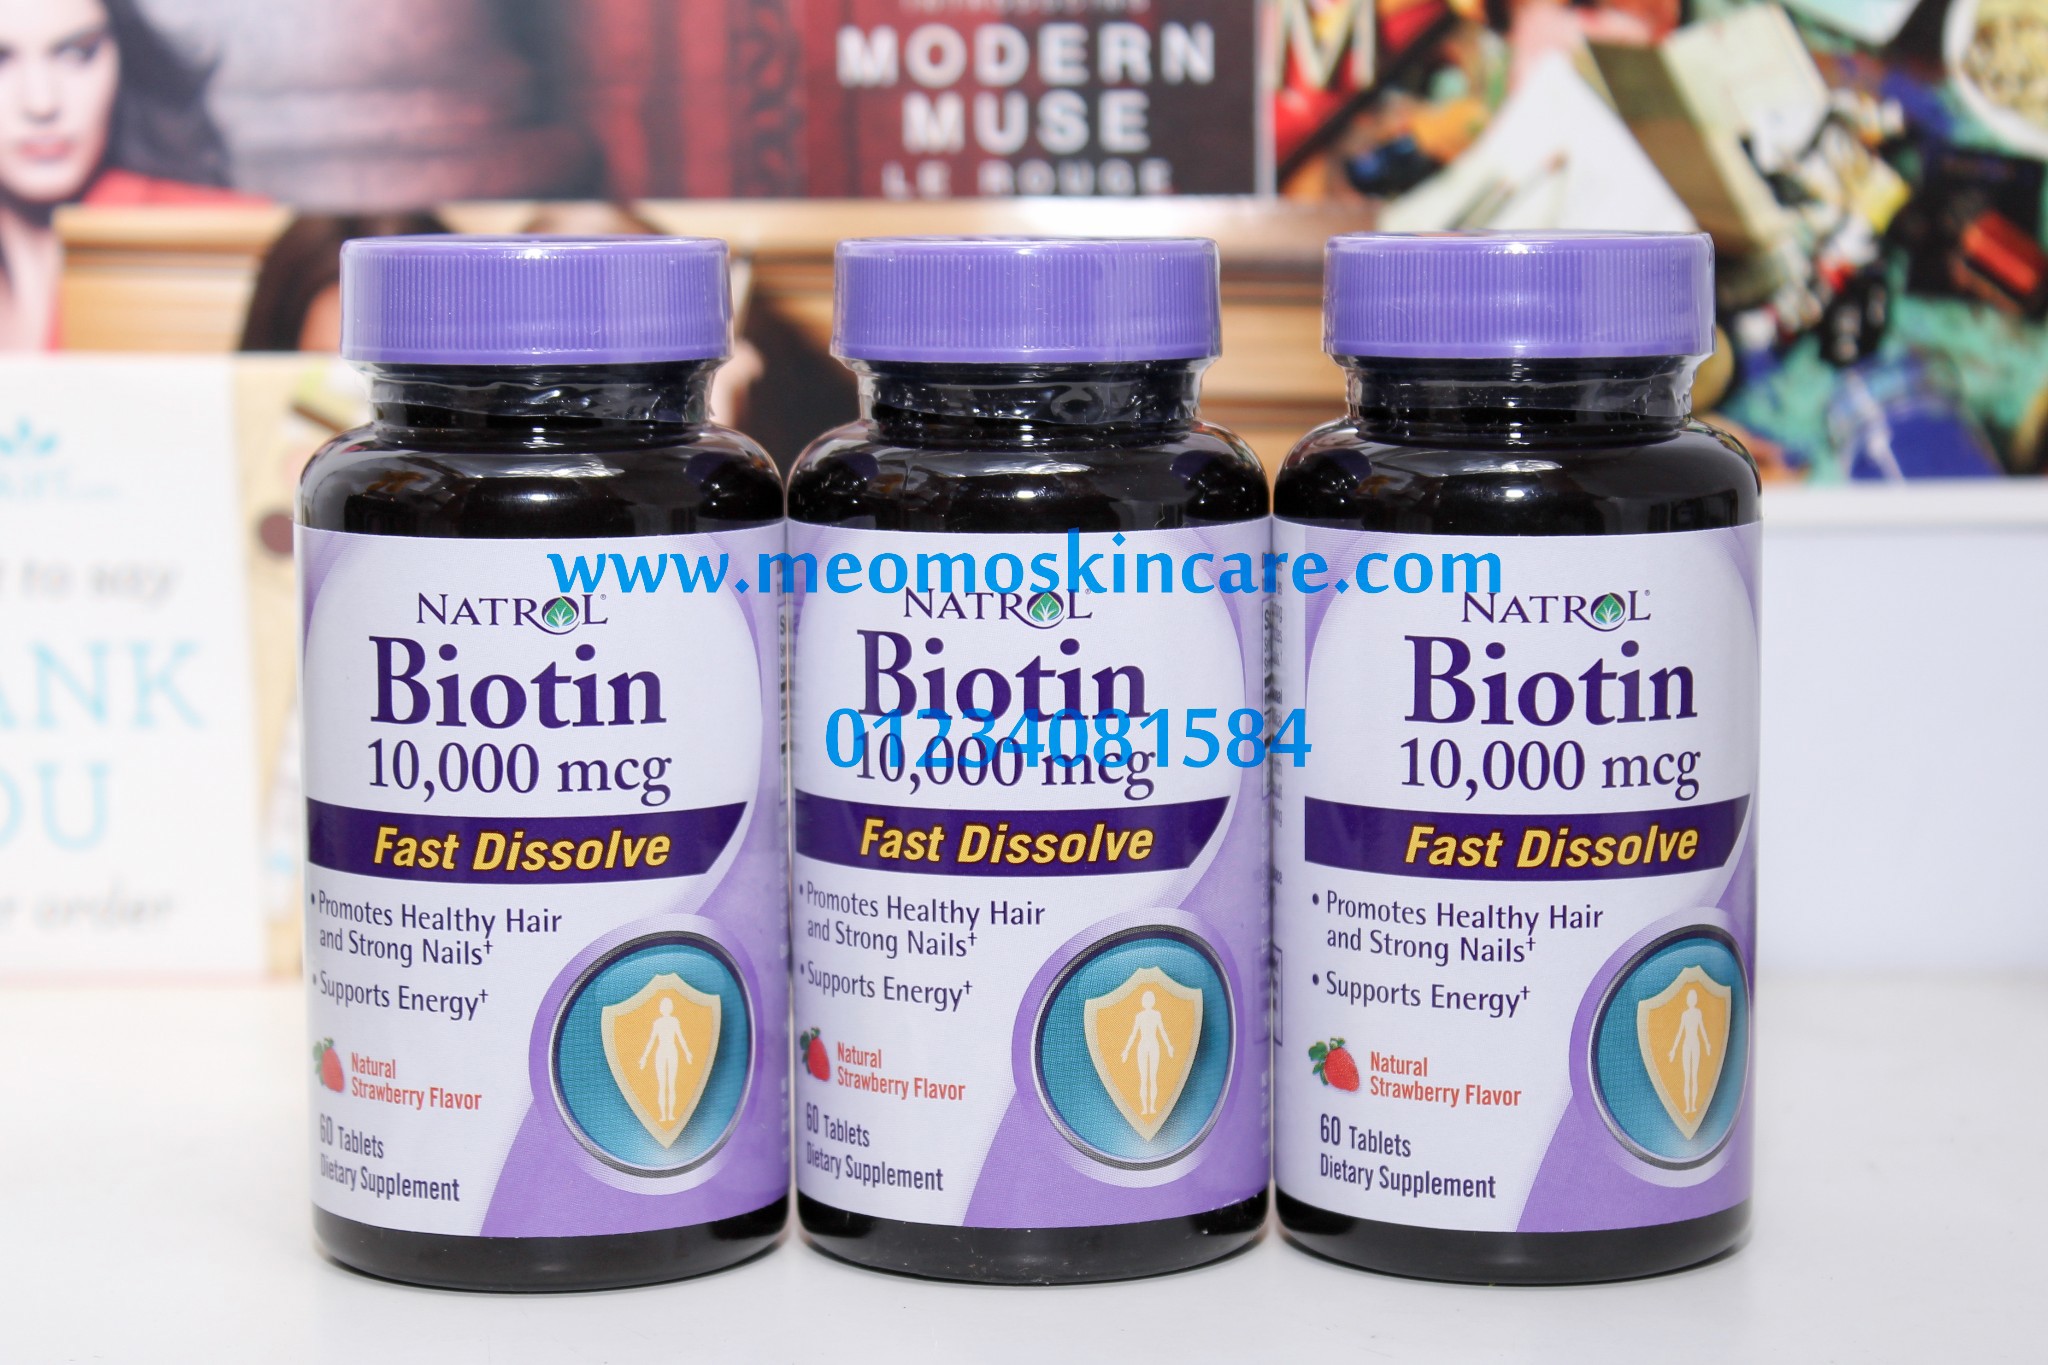 Natrol Biotin 10,000 mcg Fast Dissolve 60 tablet